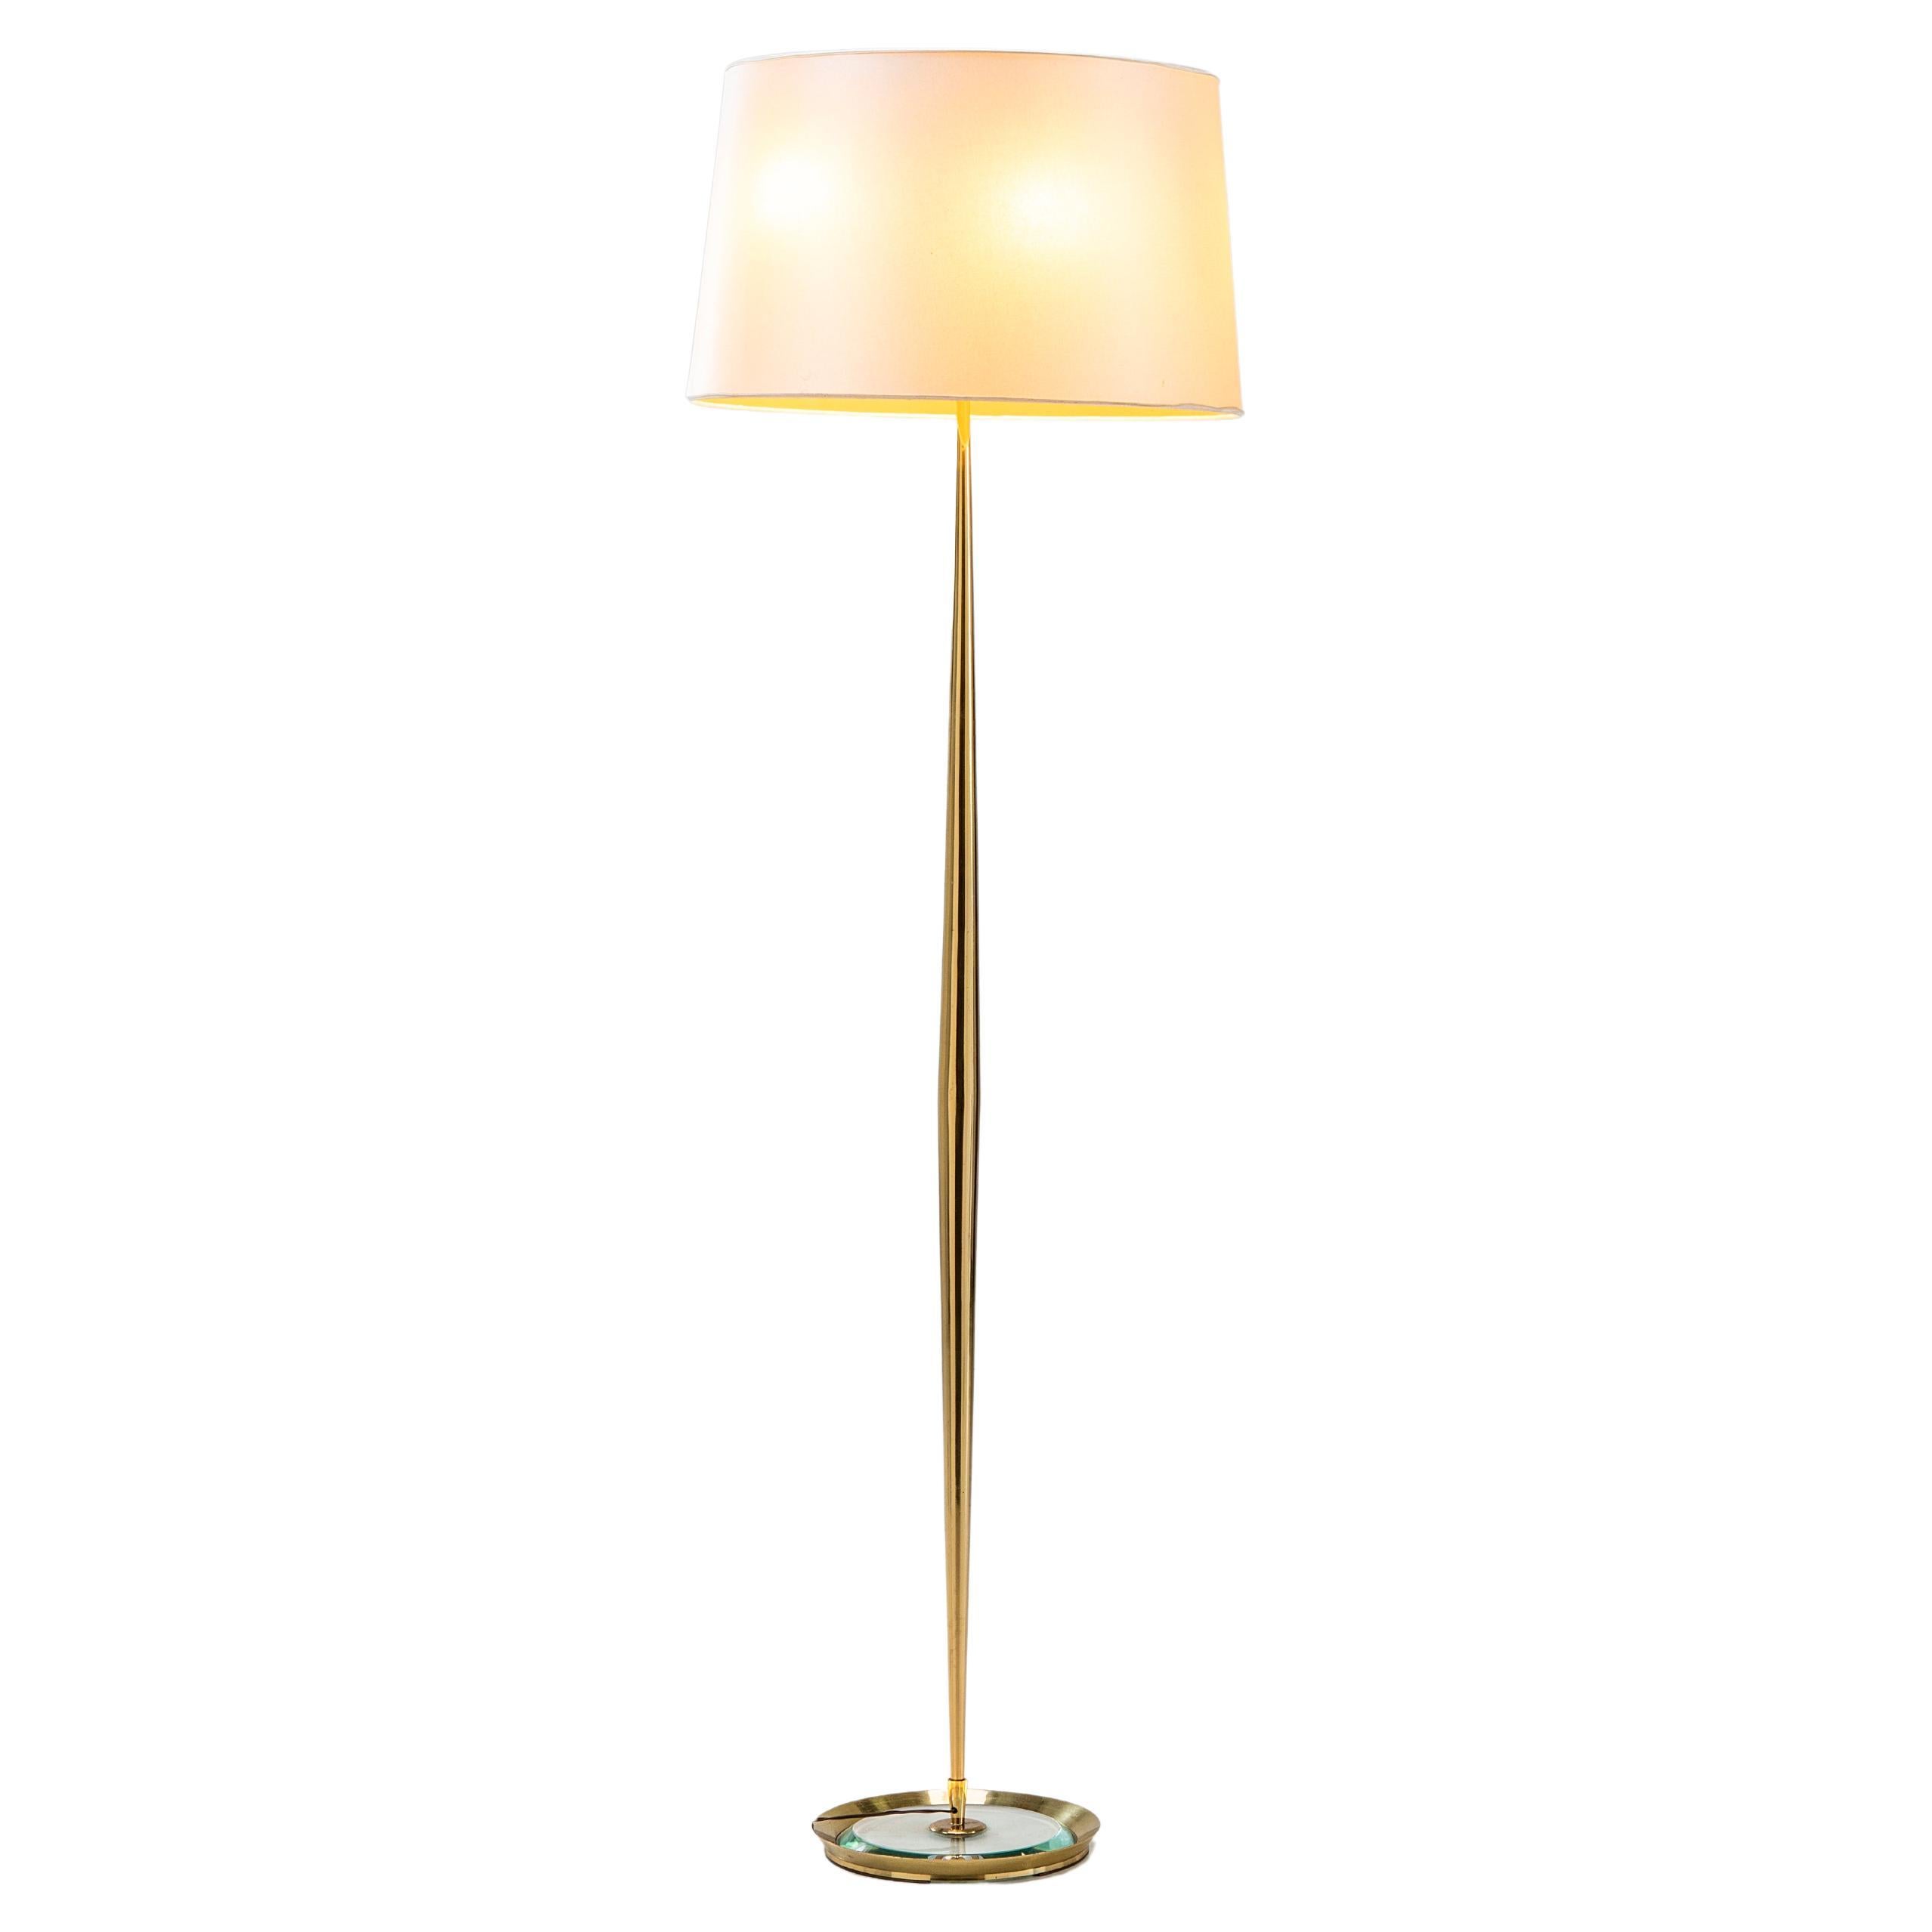 Max Ingrand Variant mod 1692 Brass floor lamp with crystal base Fontana Arte 60s